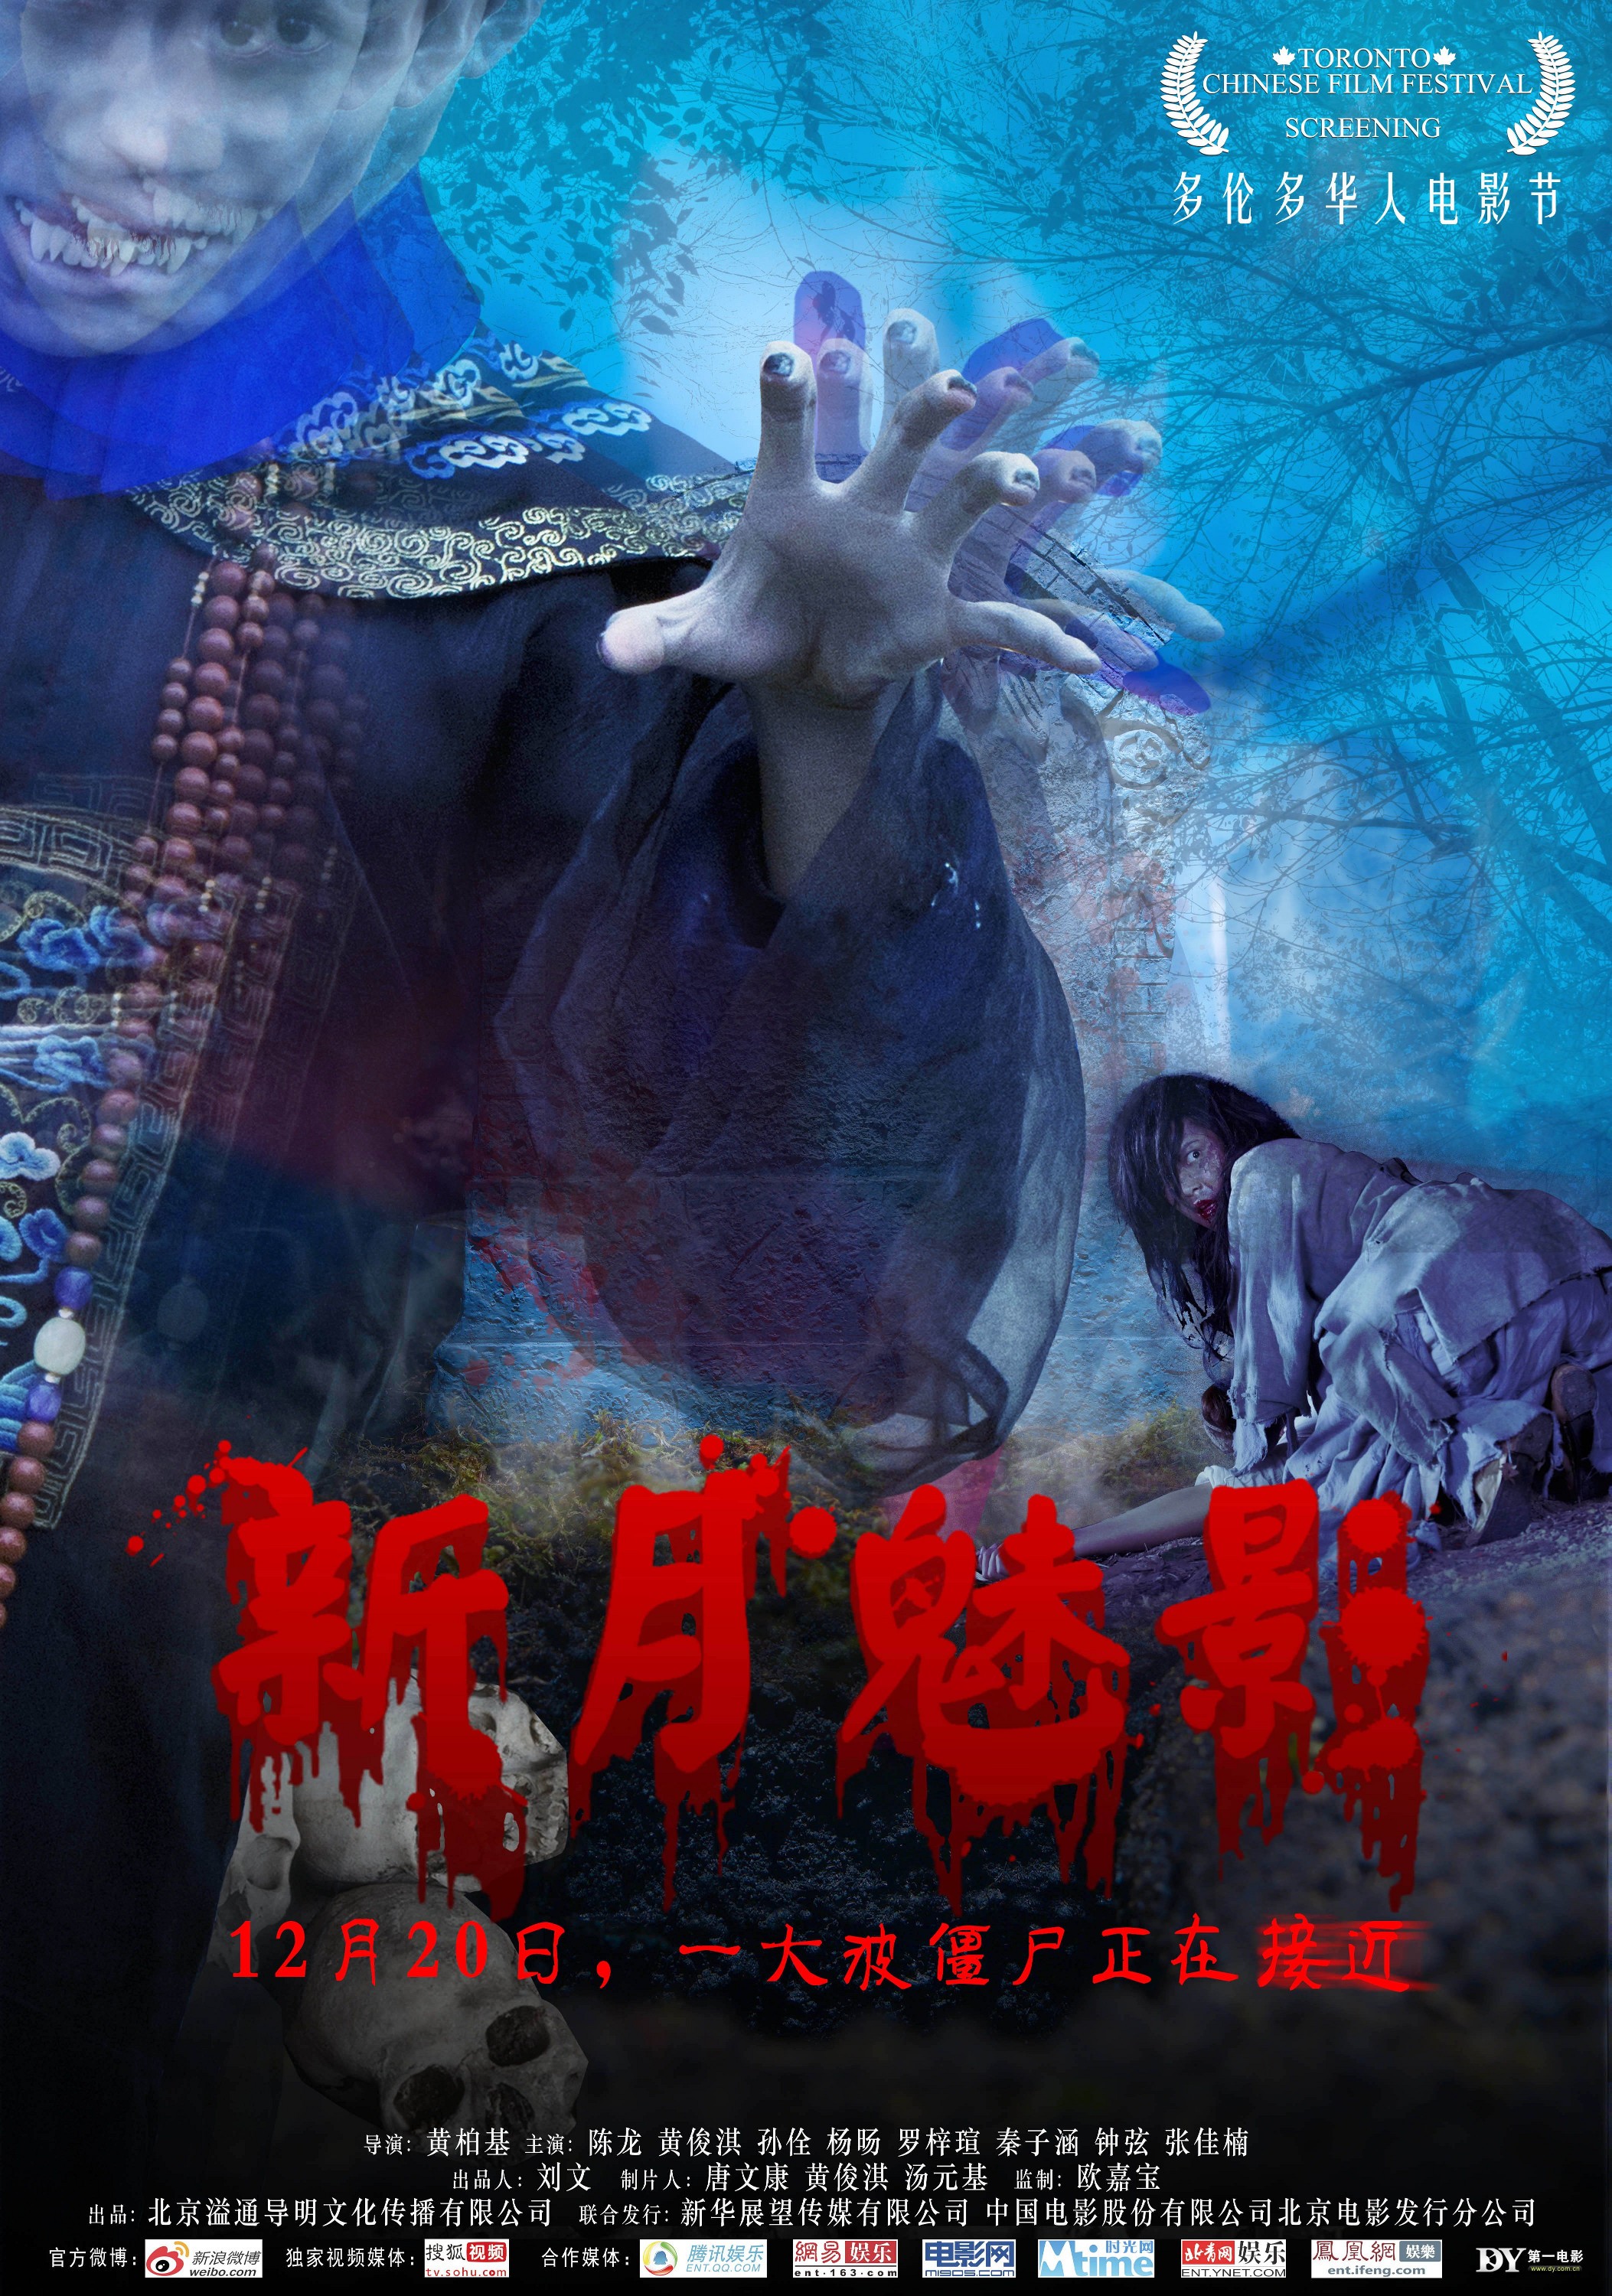 Mega Sized Movie Poster Image for Phantom Crescent 